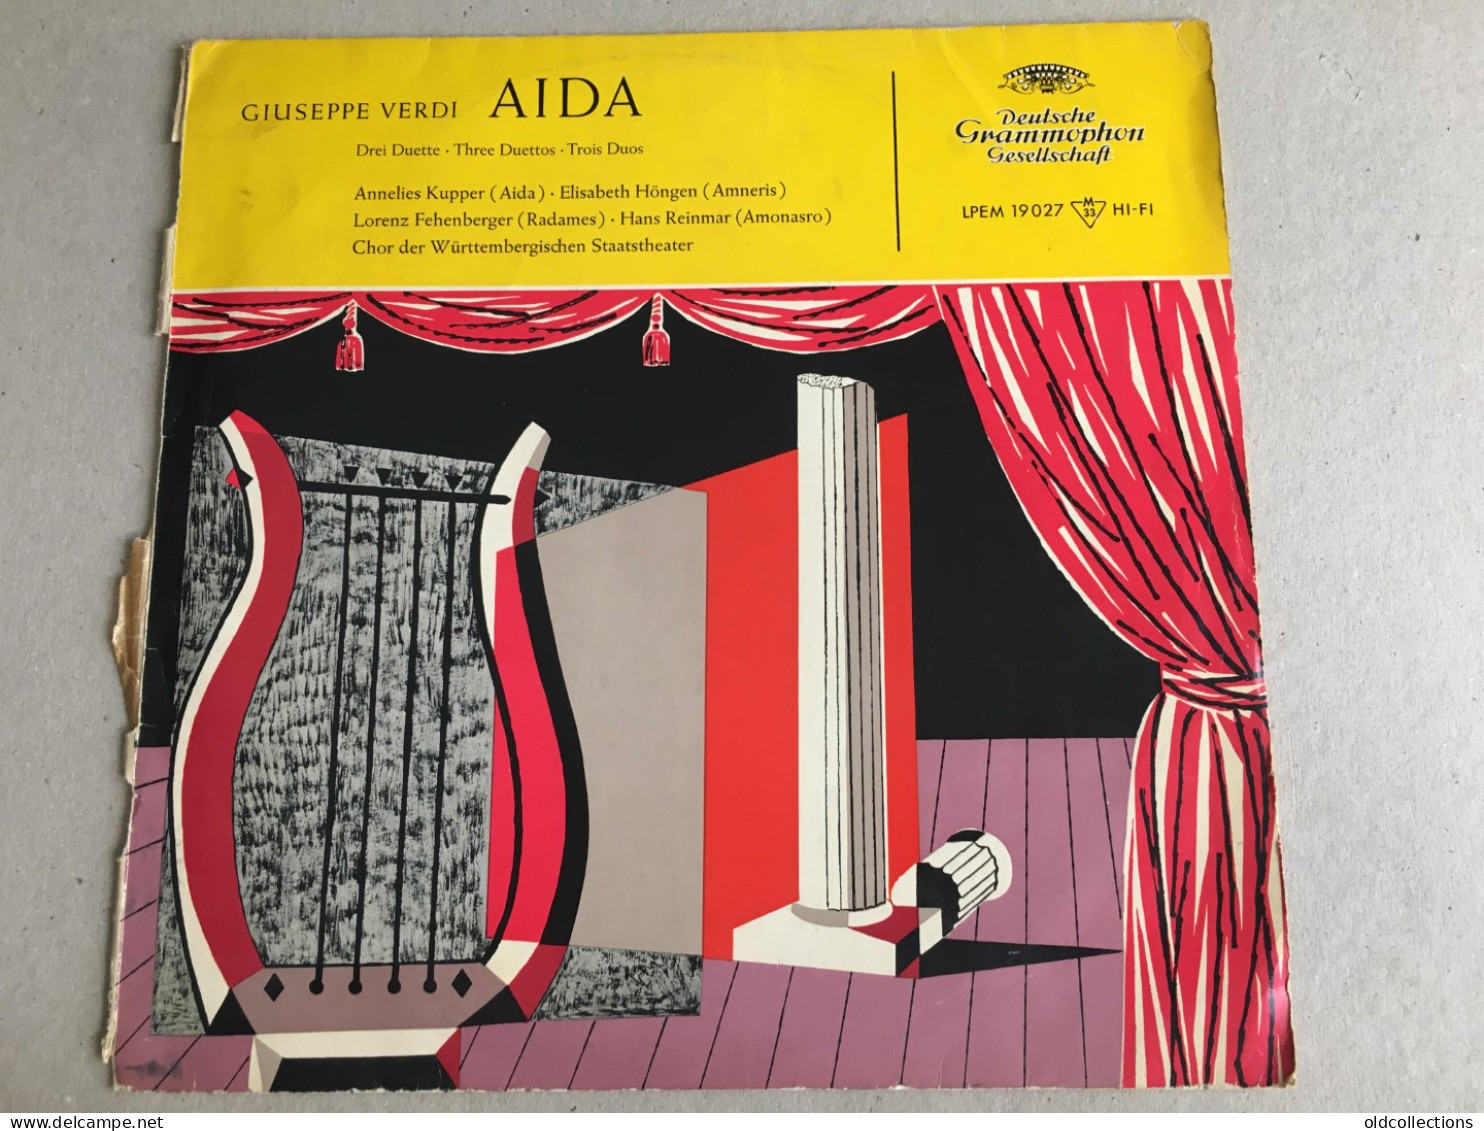 Schallplatte Vinyl Record Disque Vinyle LP Record - Giuseppe Verdi Aida  - Oper & Operette